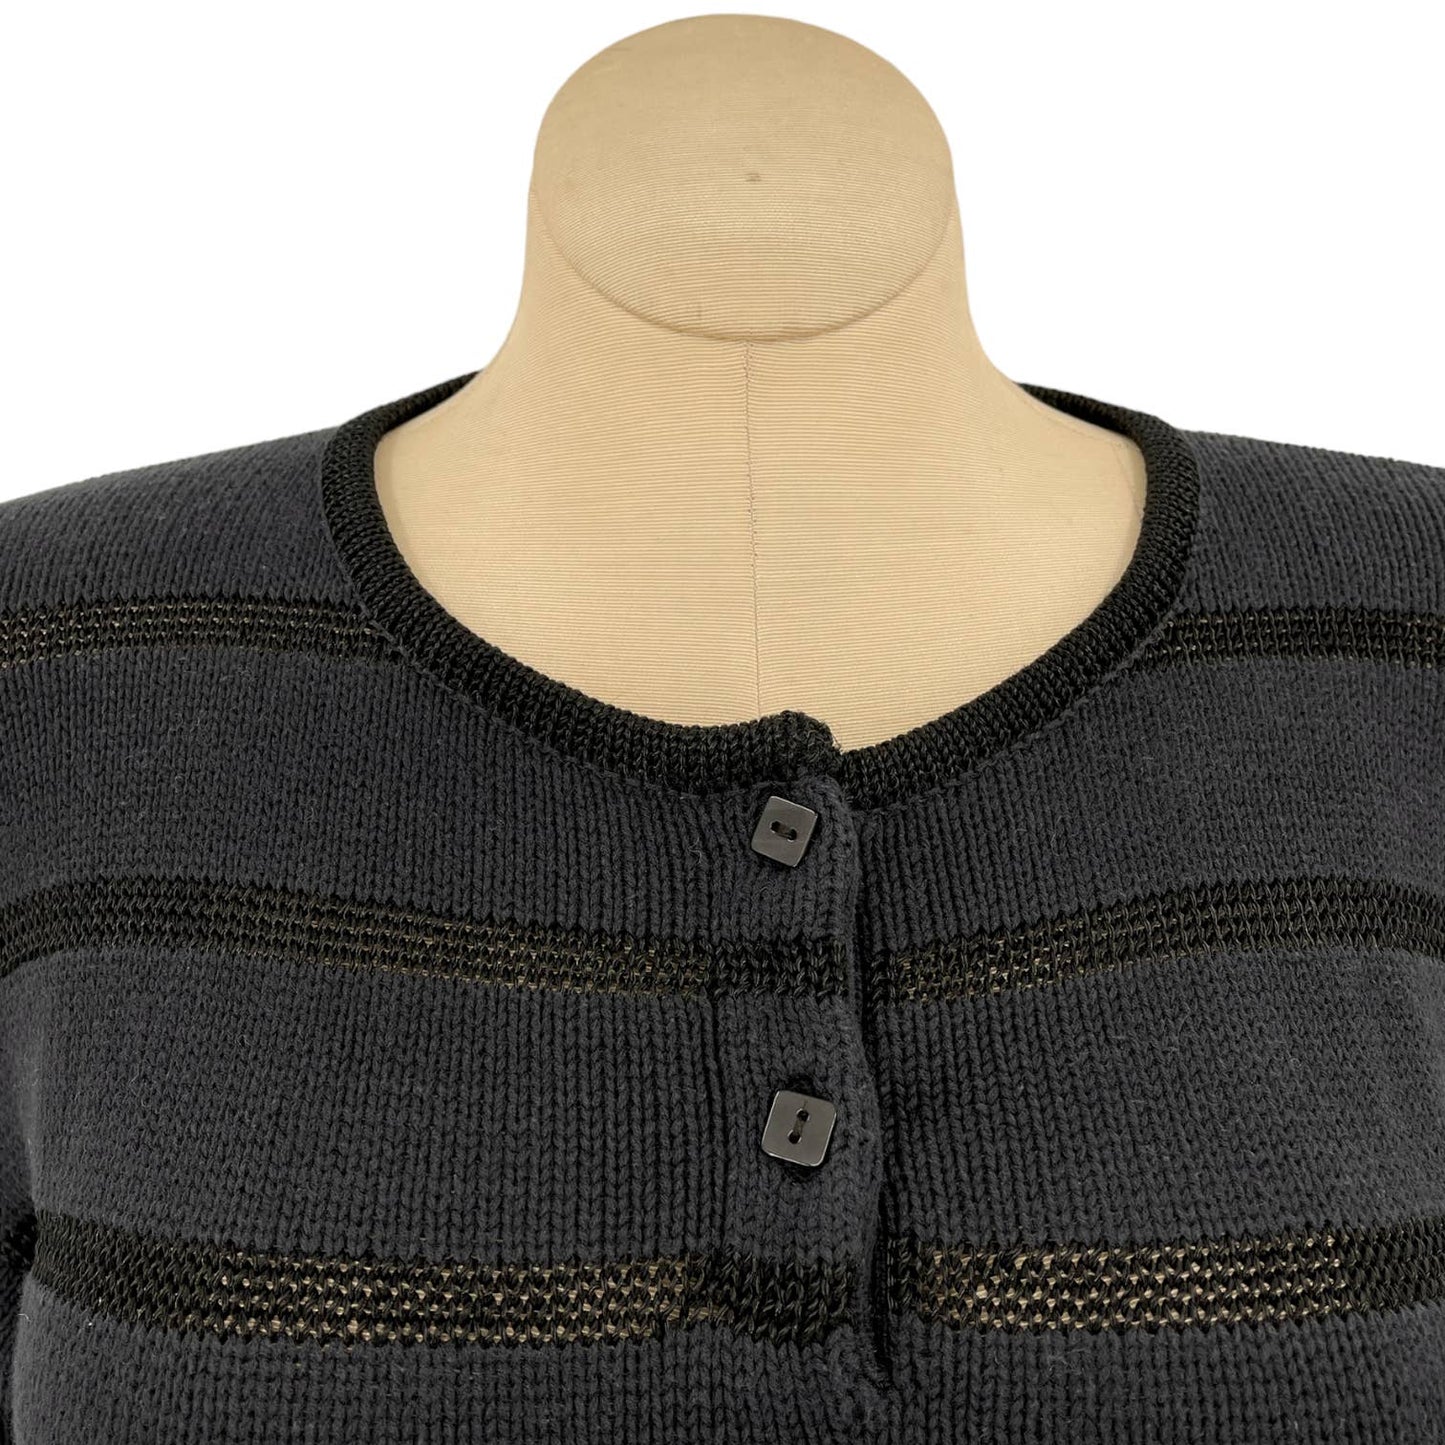 Vintage 90s Black Sweater Open Knit Stripes Henley Pullover Rosanna Size L XL